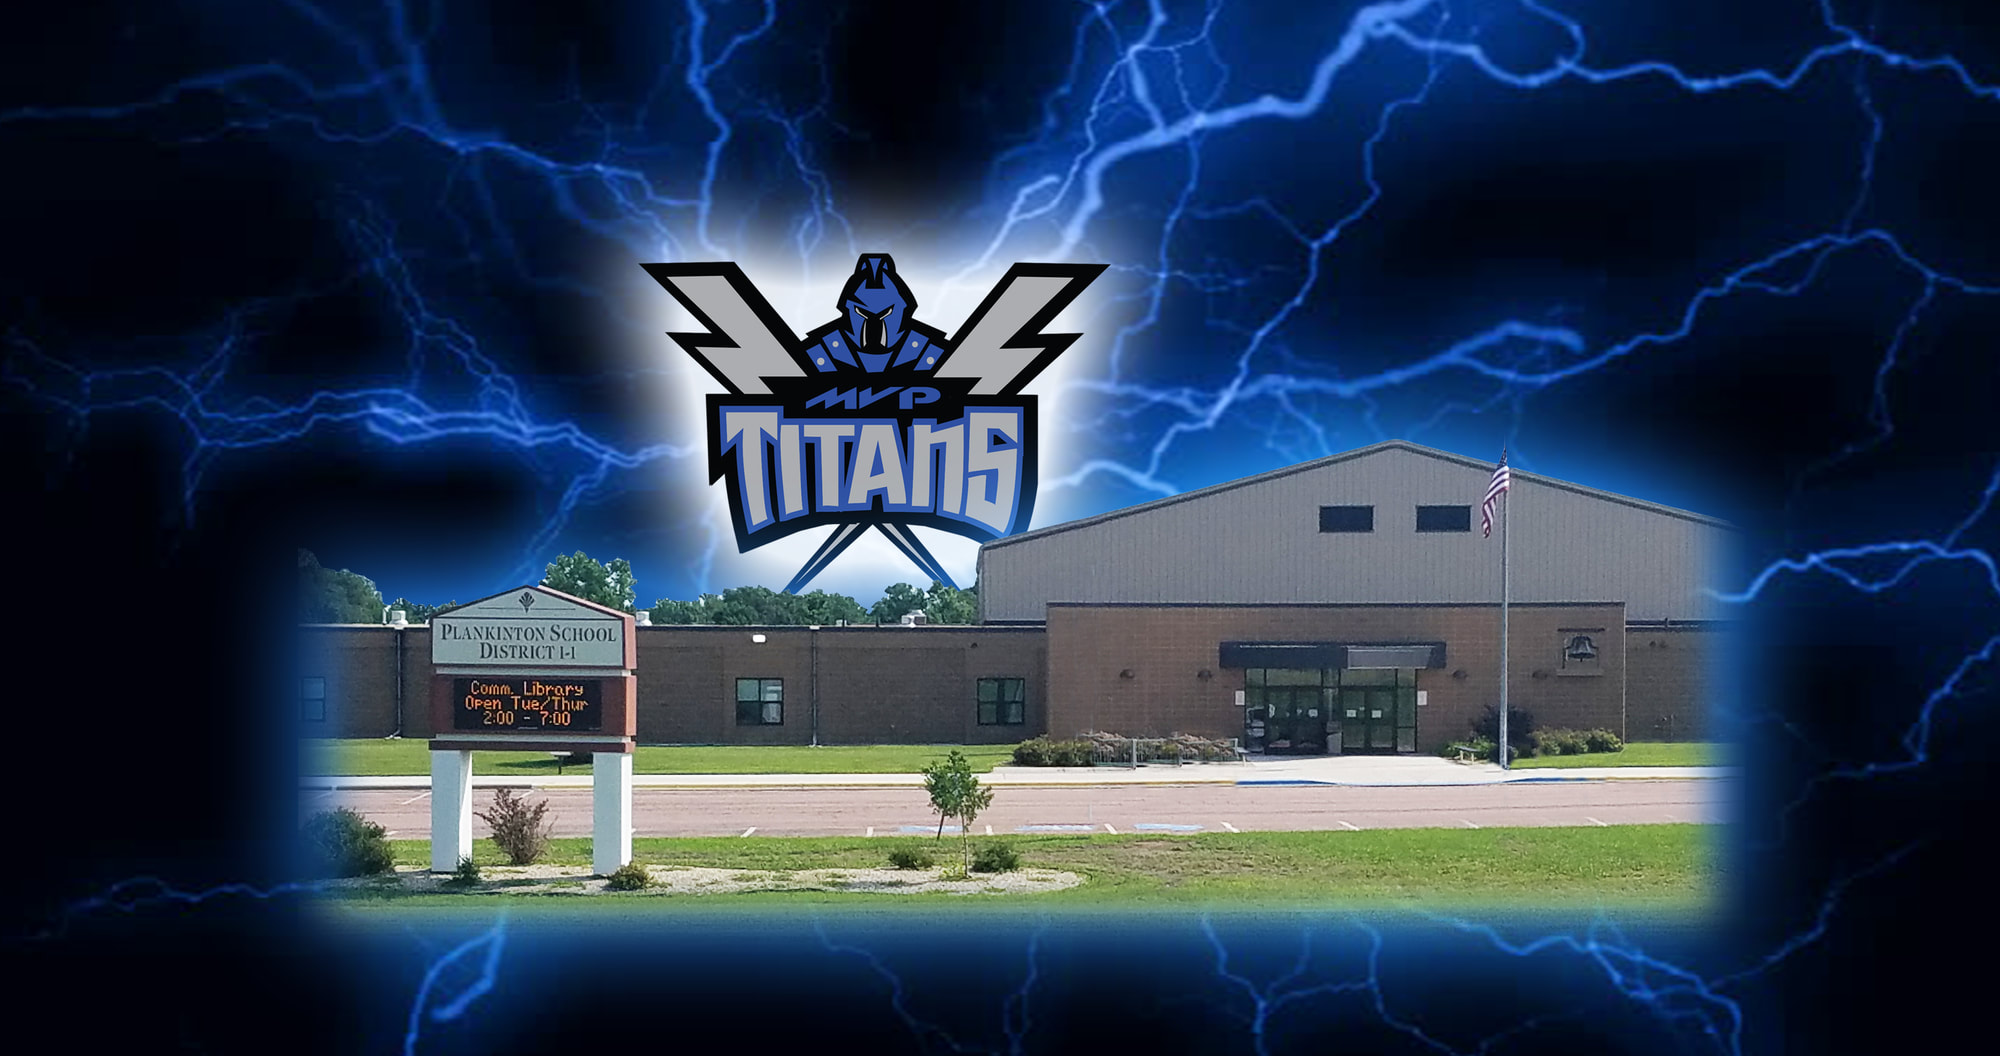 Plankinton School with Titans Logo and lightning